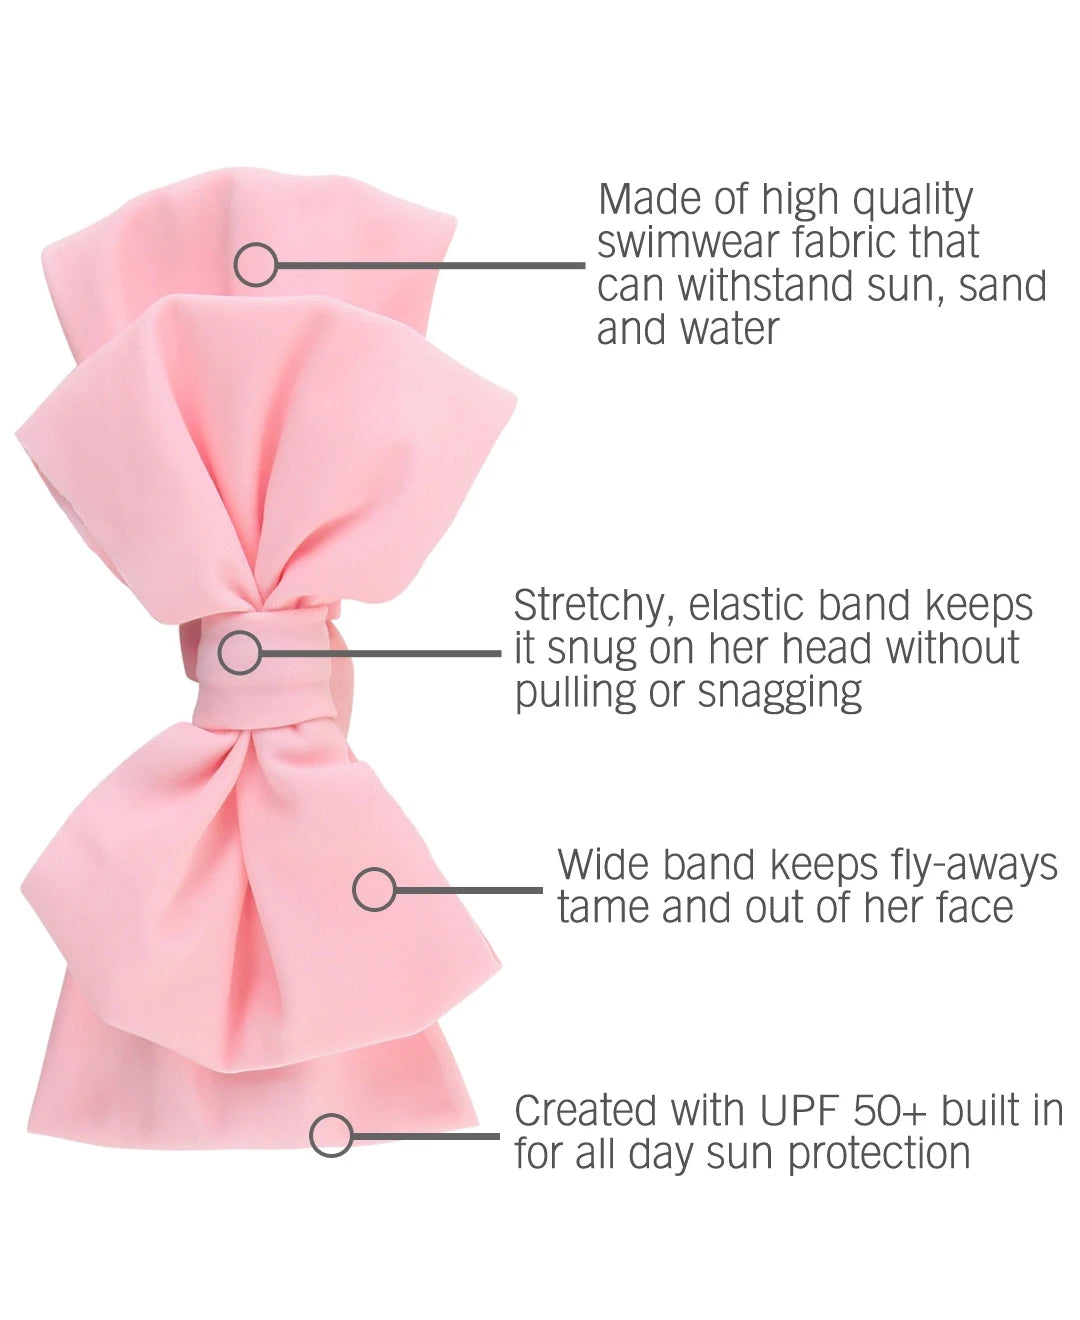 Pink Swim Bow Headband